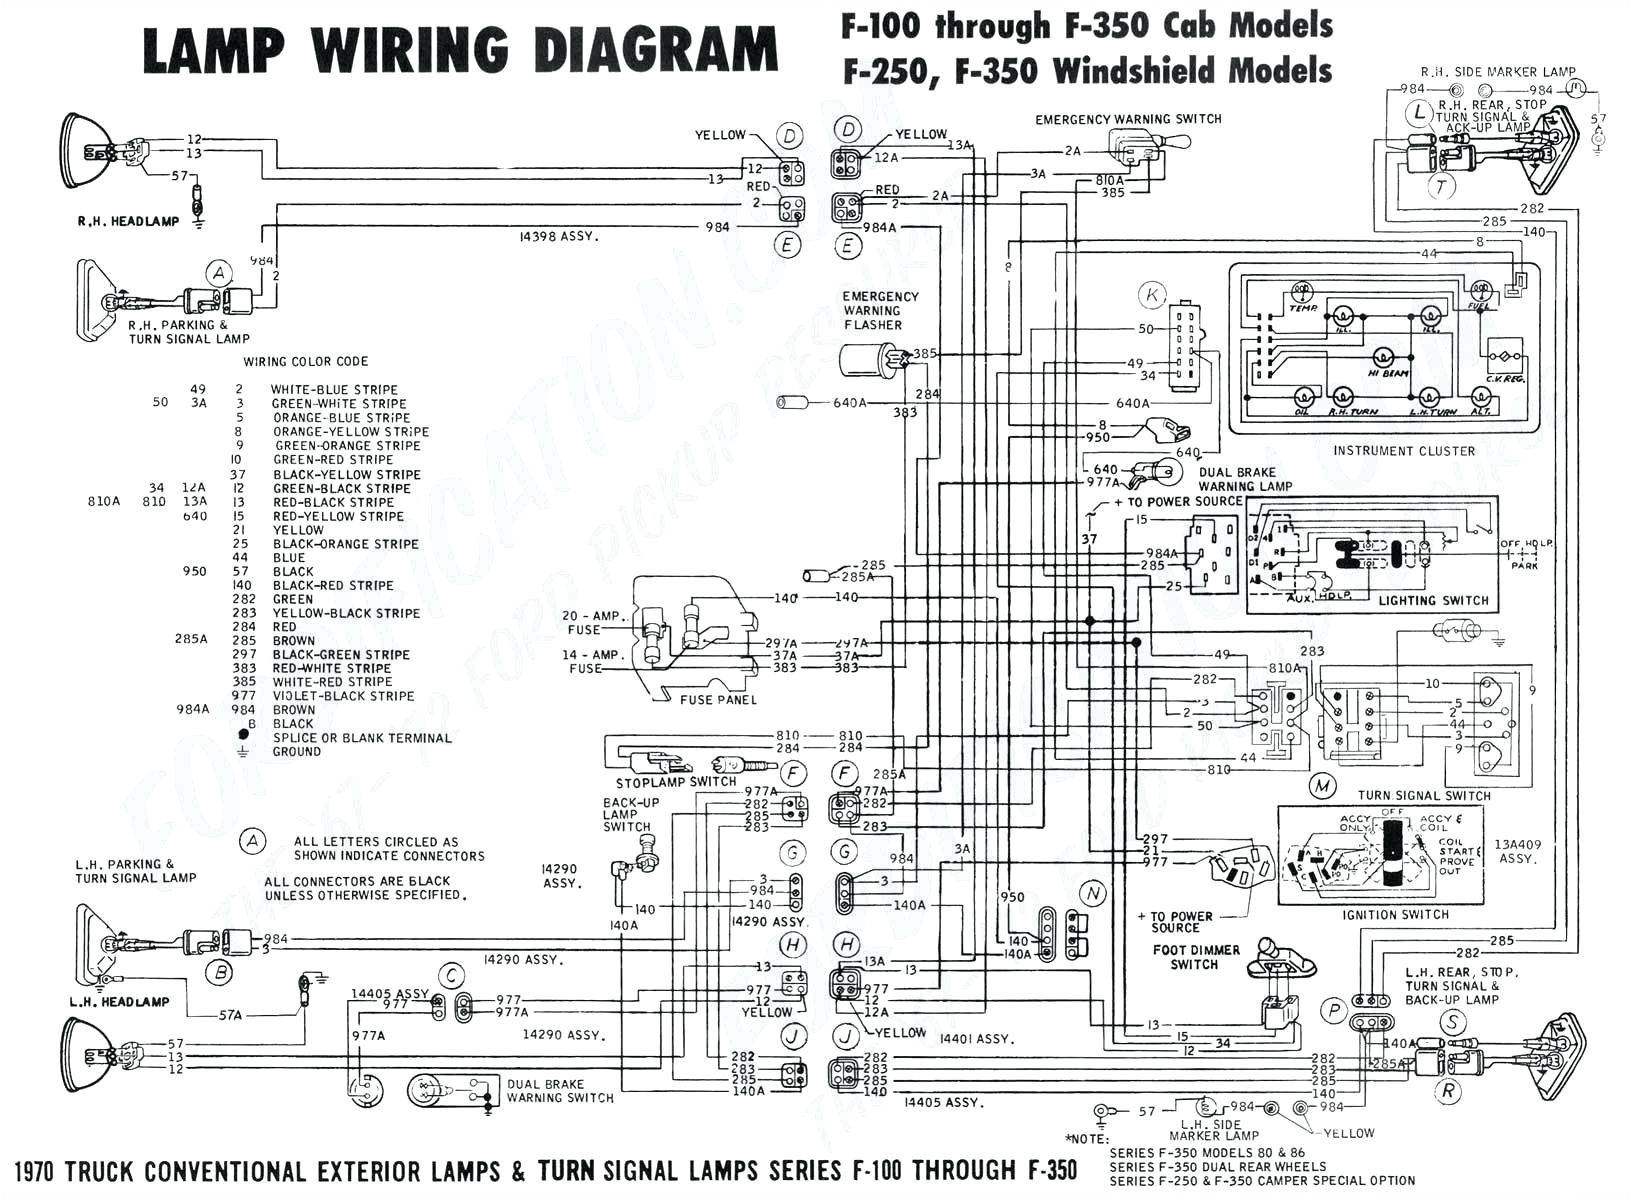 medallion gauge wiring diagram inspirational land rover fuel gauge wiring diagram trusted wiring diagrams e280a2 jpg